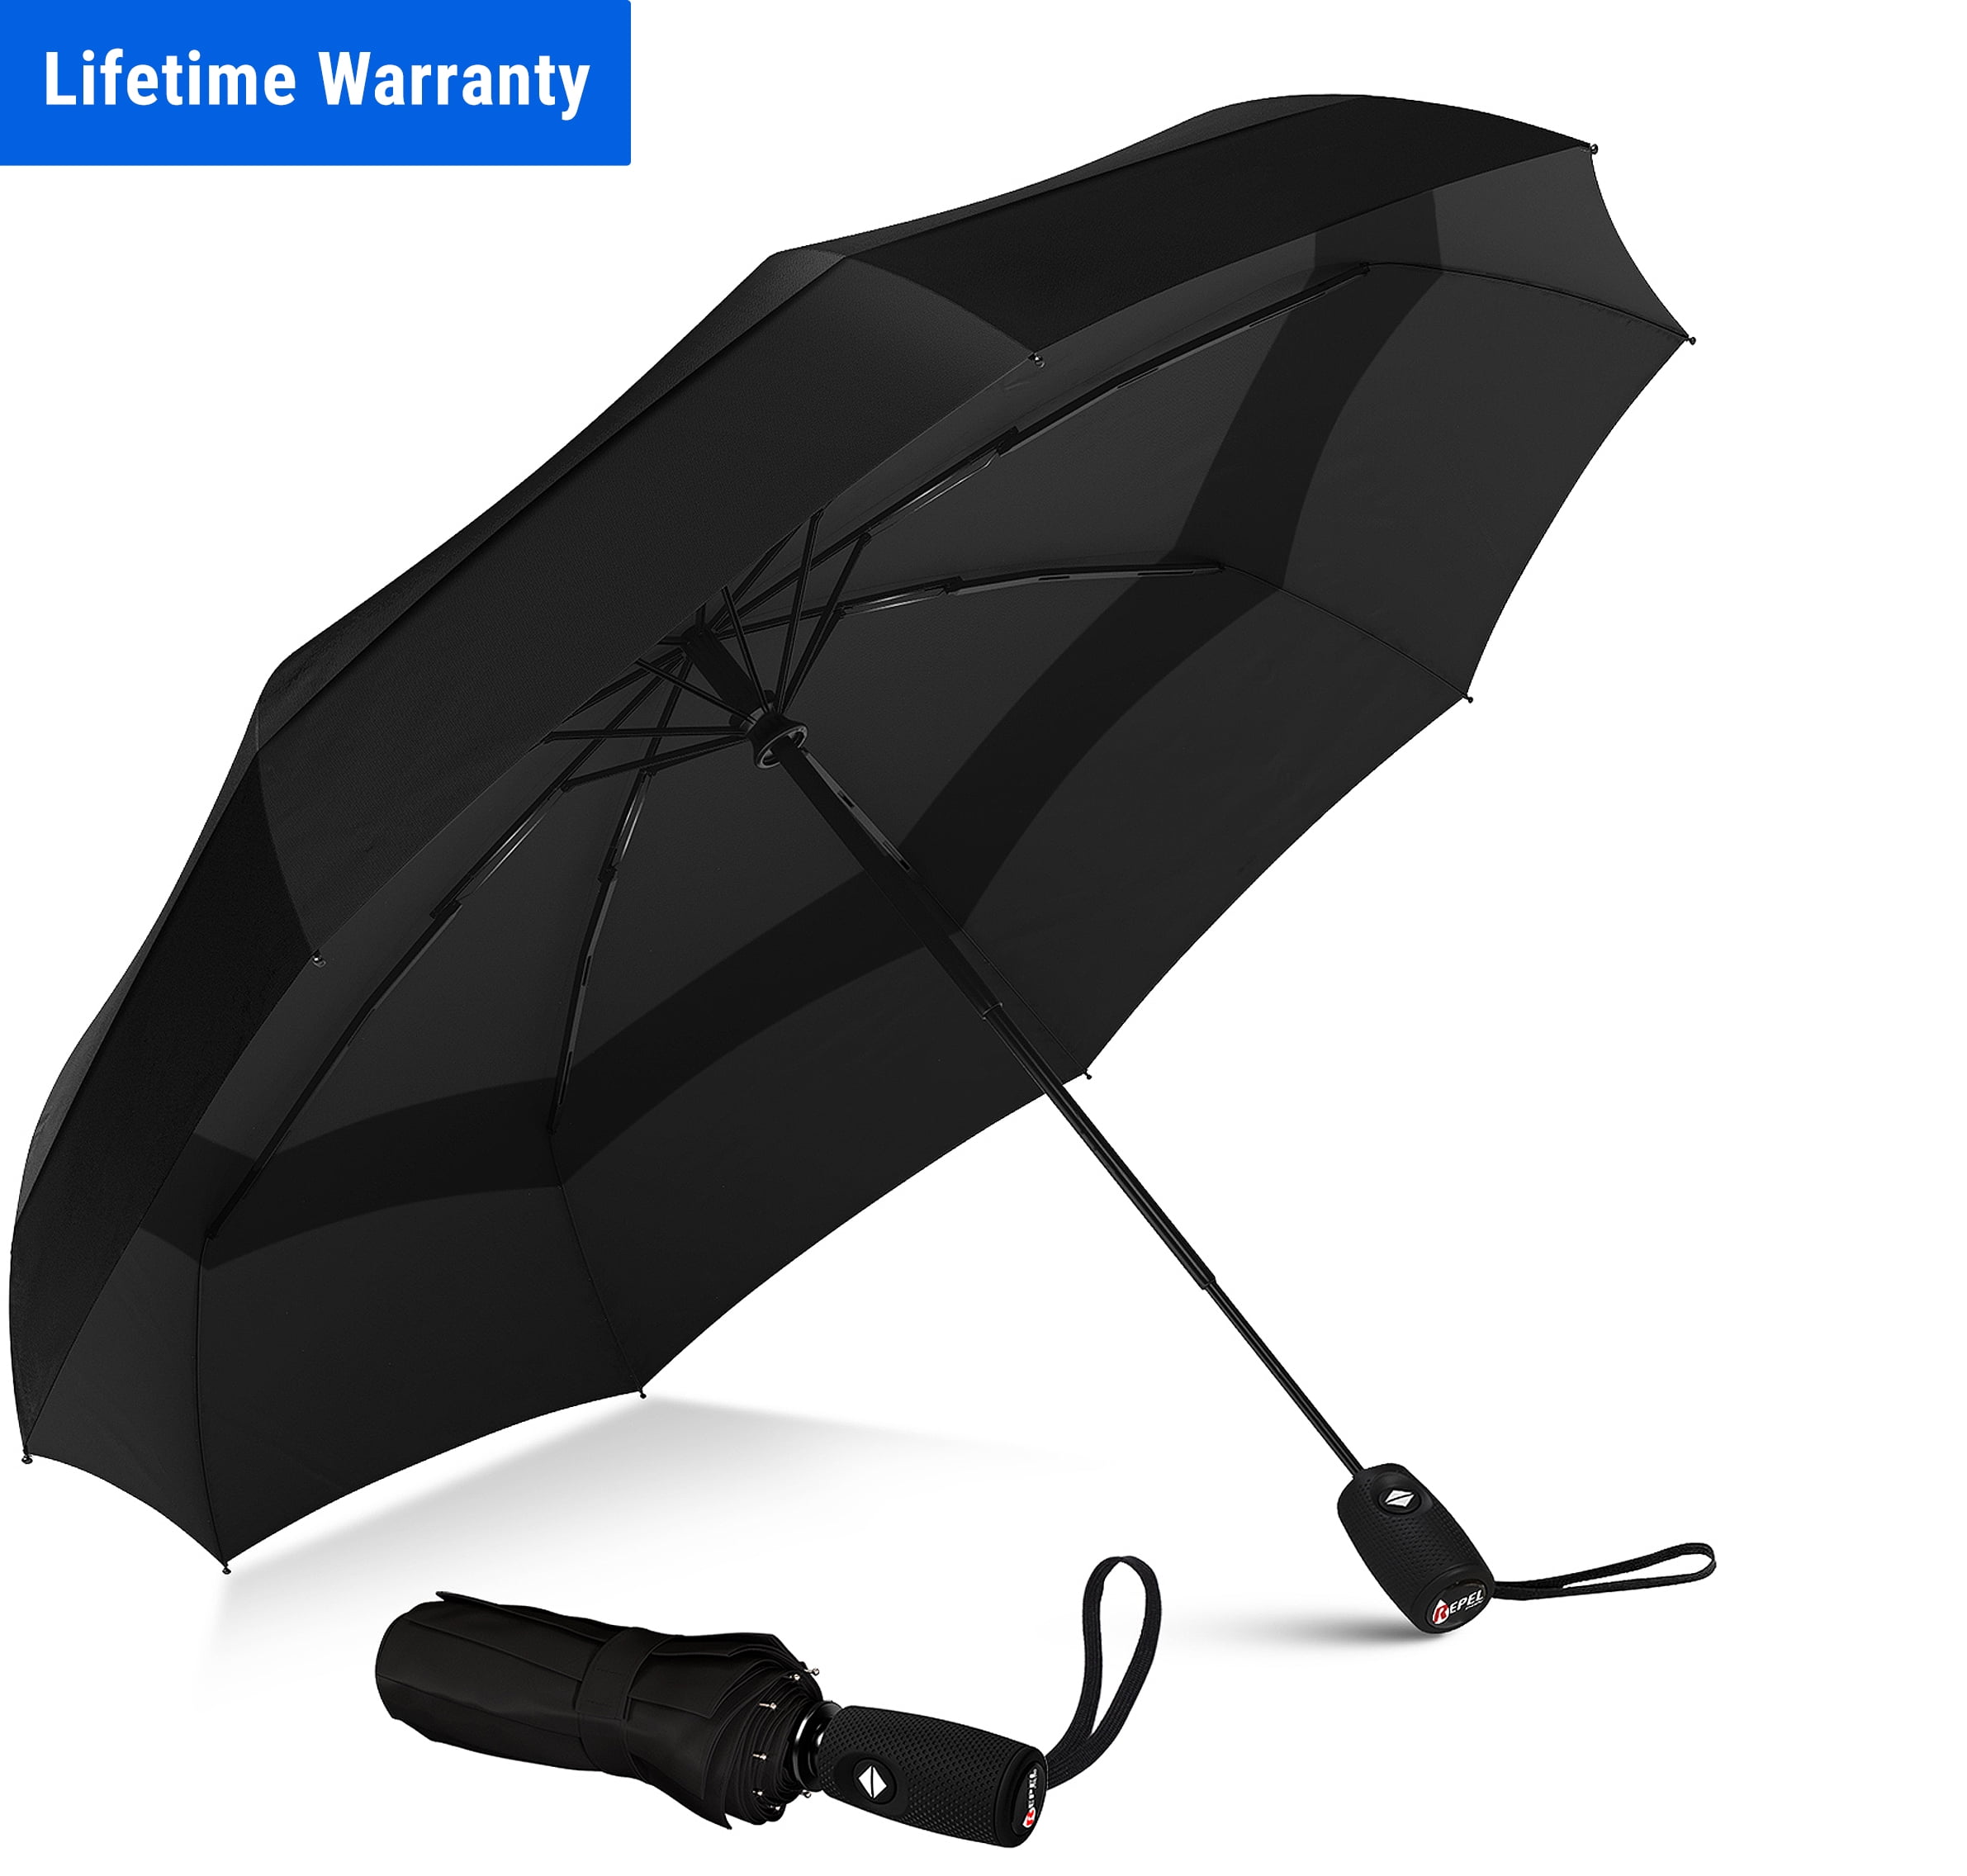 Sturdy UV Protection Waterproof Umbrella Windproof Umbrella Blue Sky Compact Auto Open Close Umbrella with Double Layer Design 10 Ribs Umbrella,Large Travel Umbrella 